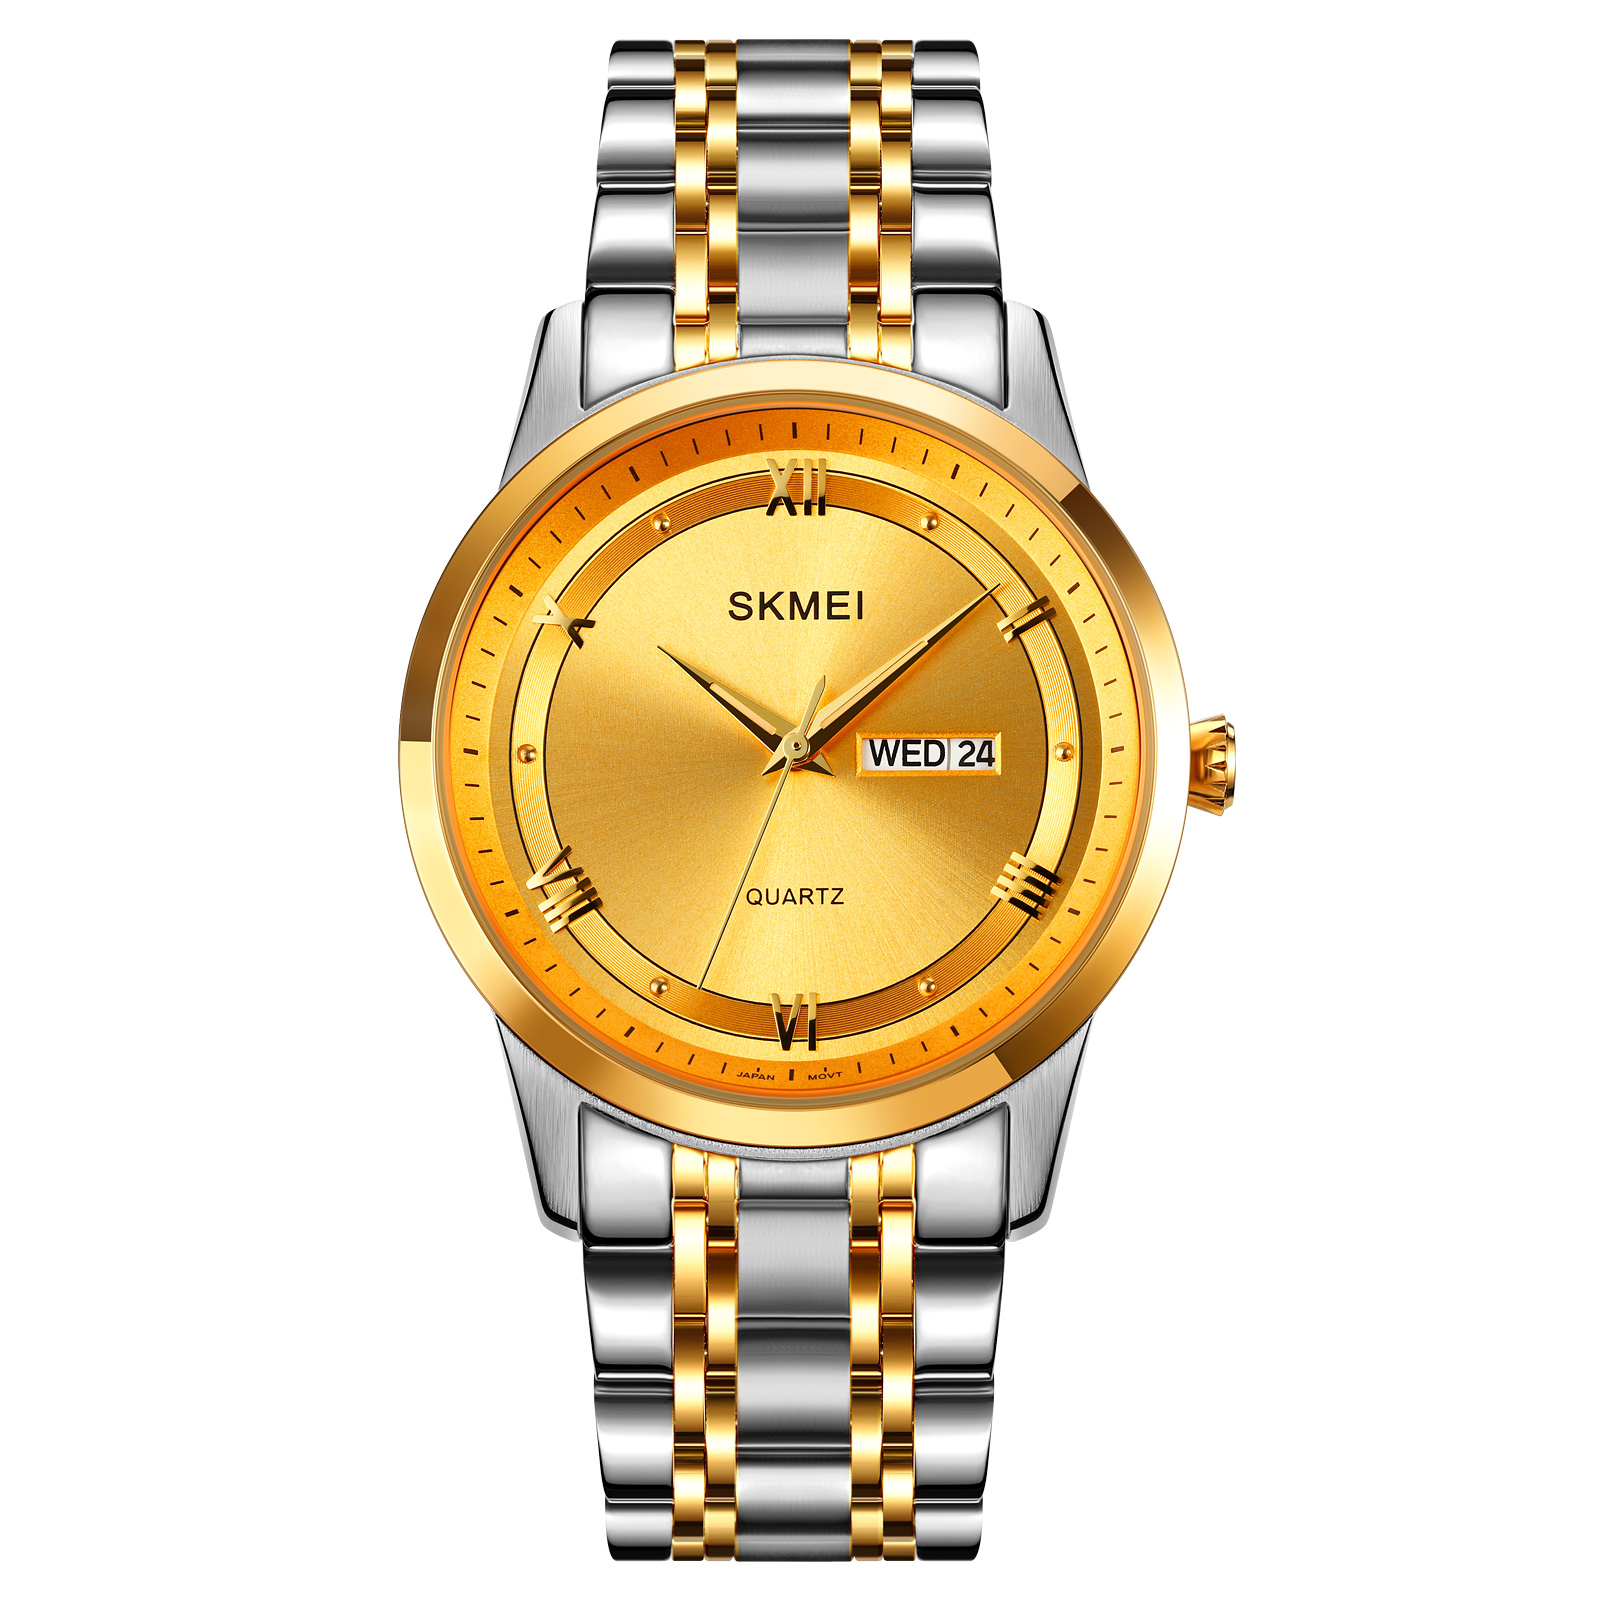 oem wristwatches-Skmei Watch Manufacture Co.,Ltd